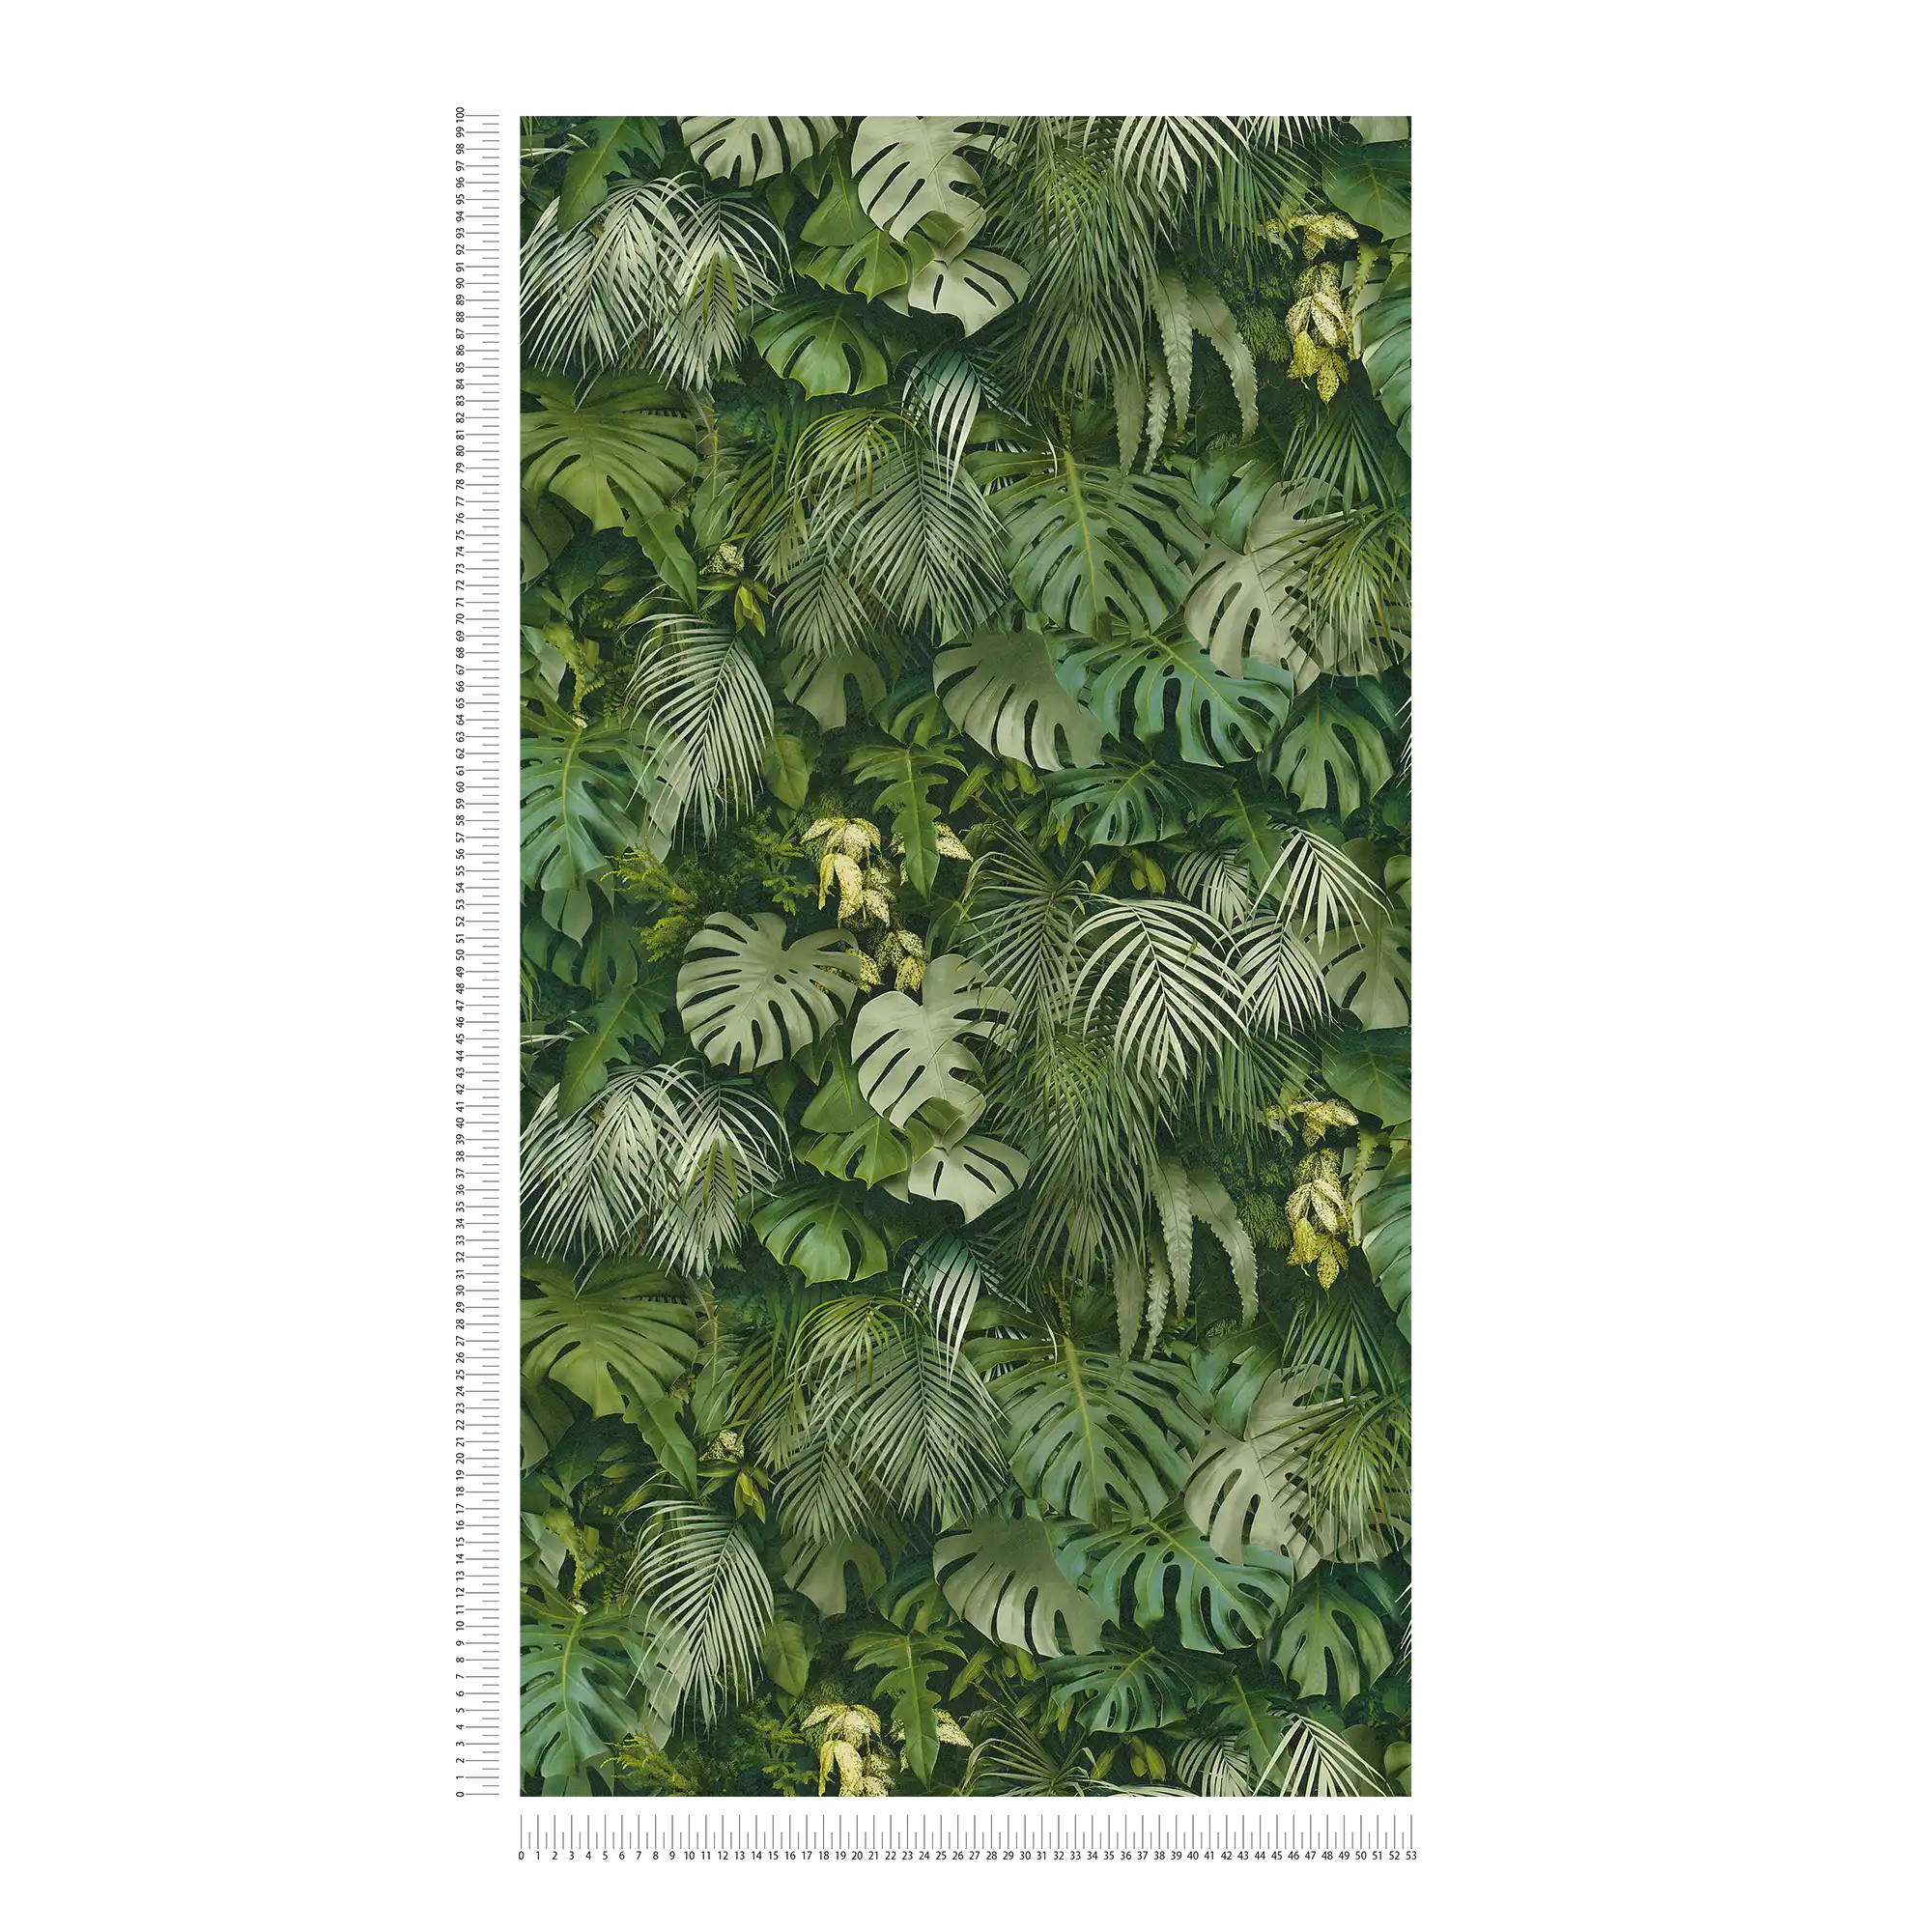             Behang groen blad bos, realistisch, kleuraccenten - groen
        